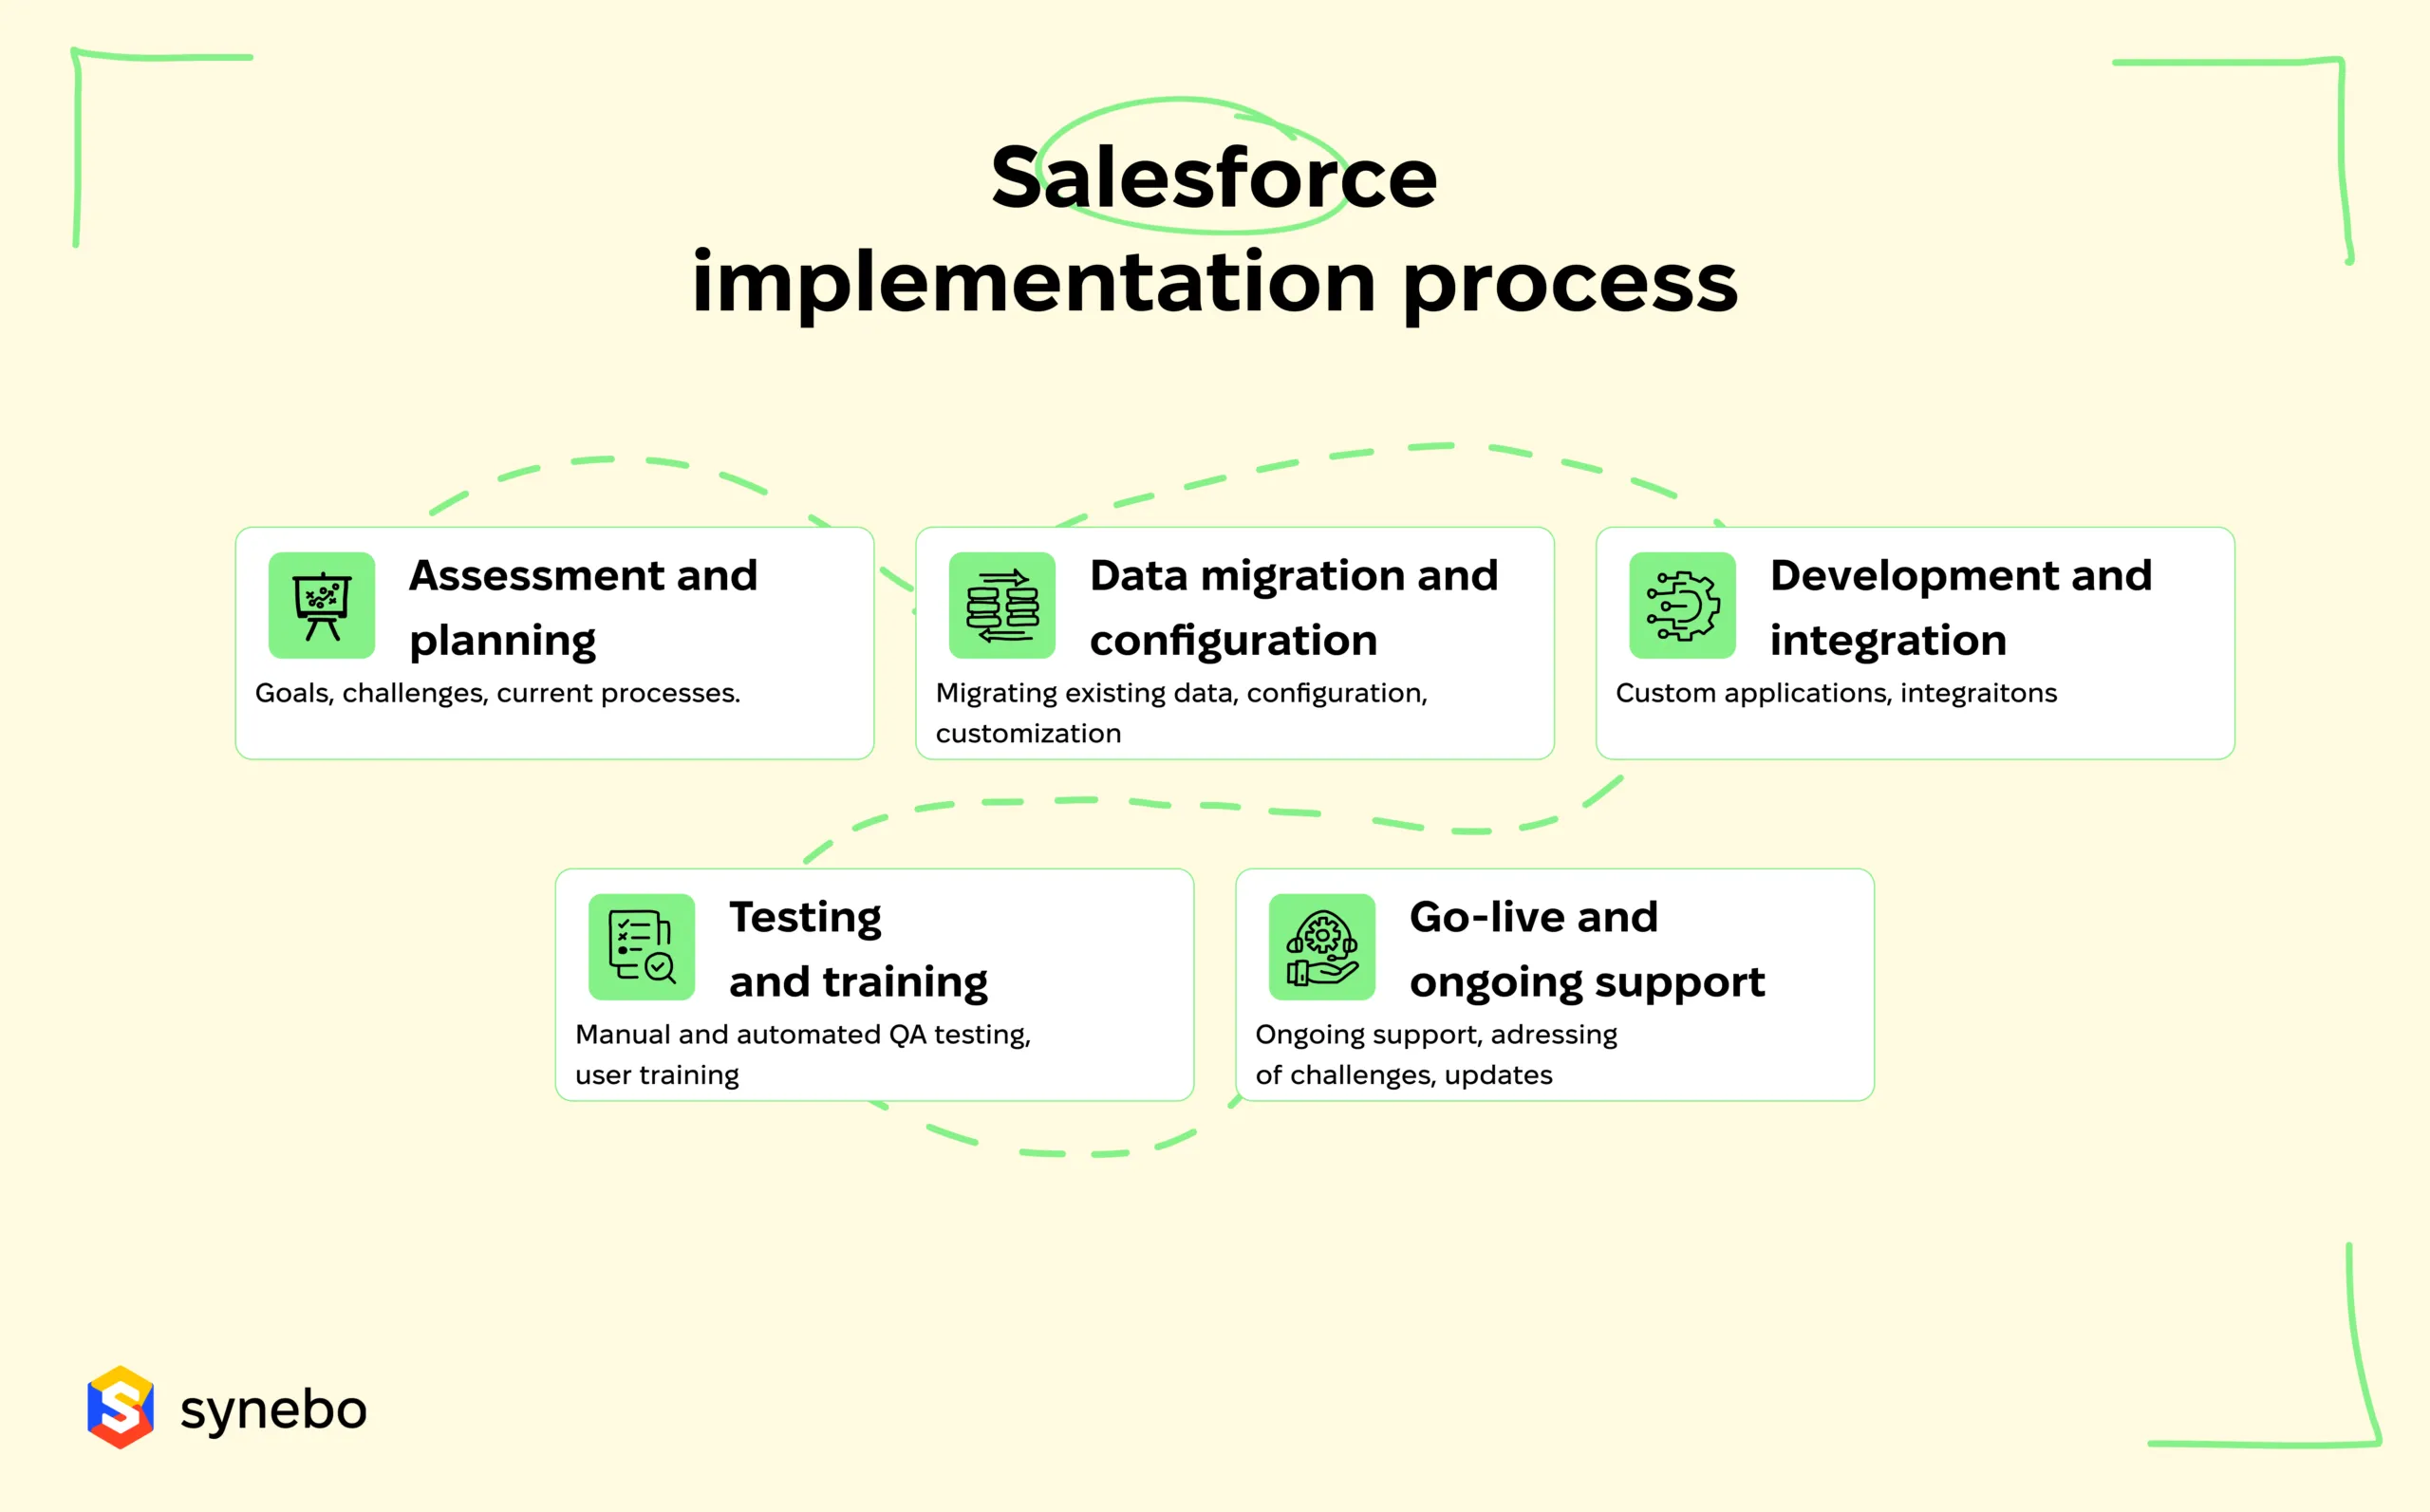 Salesforce inplementation process